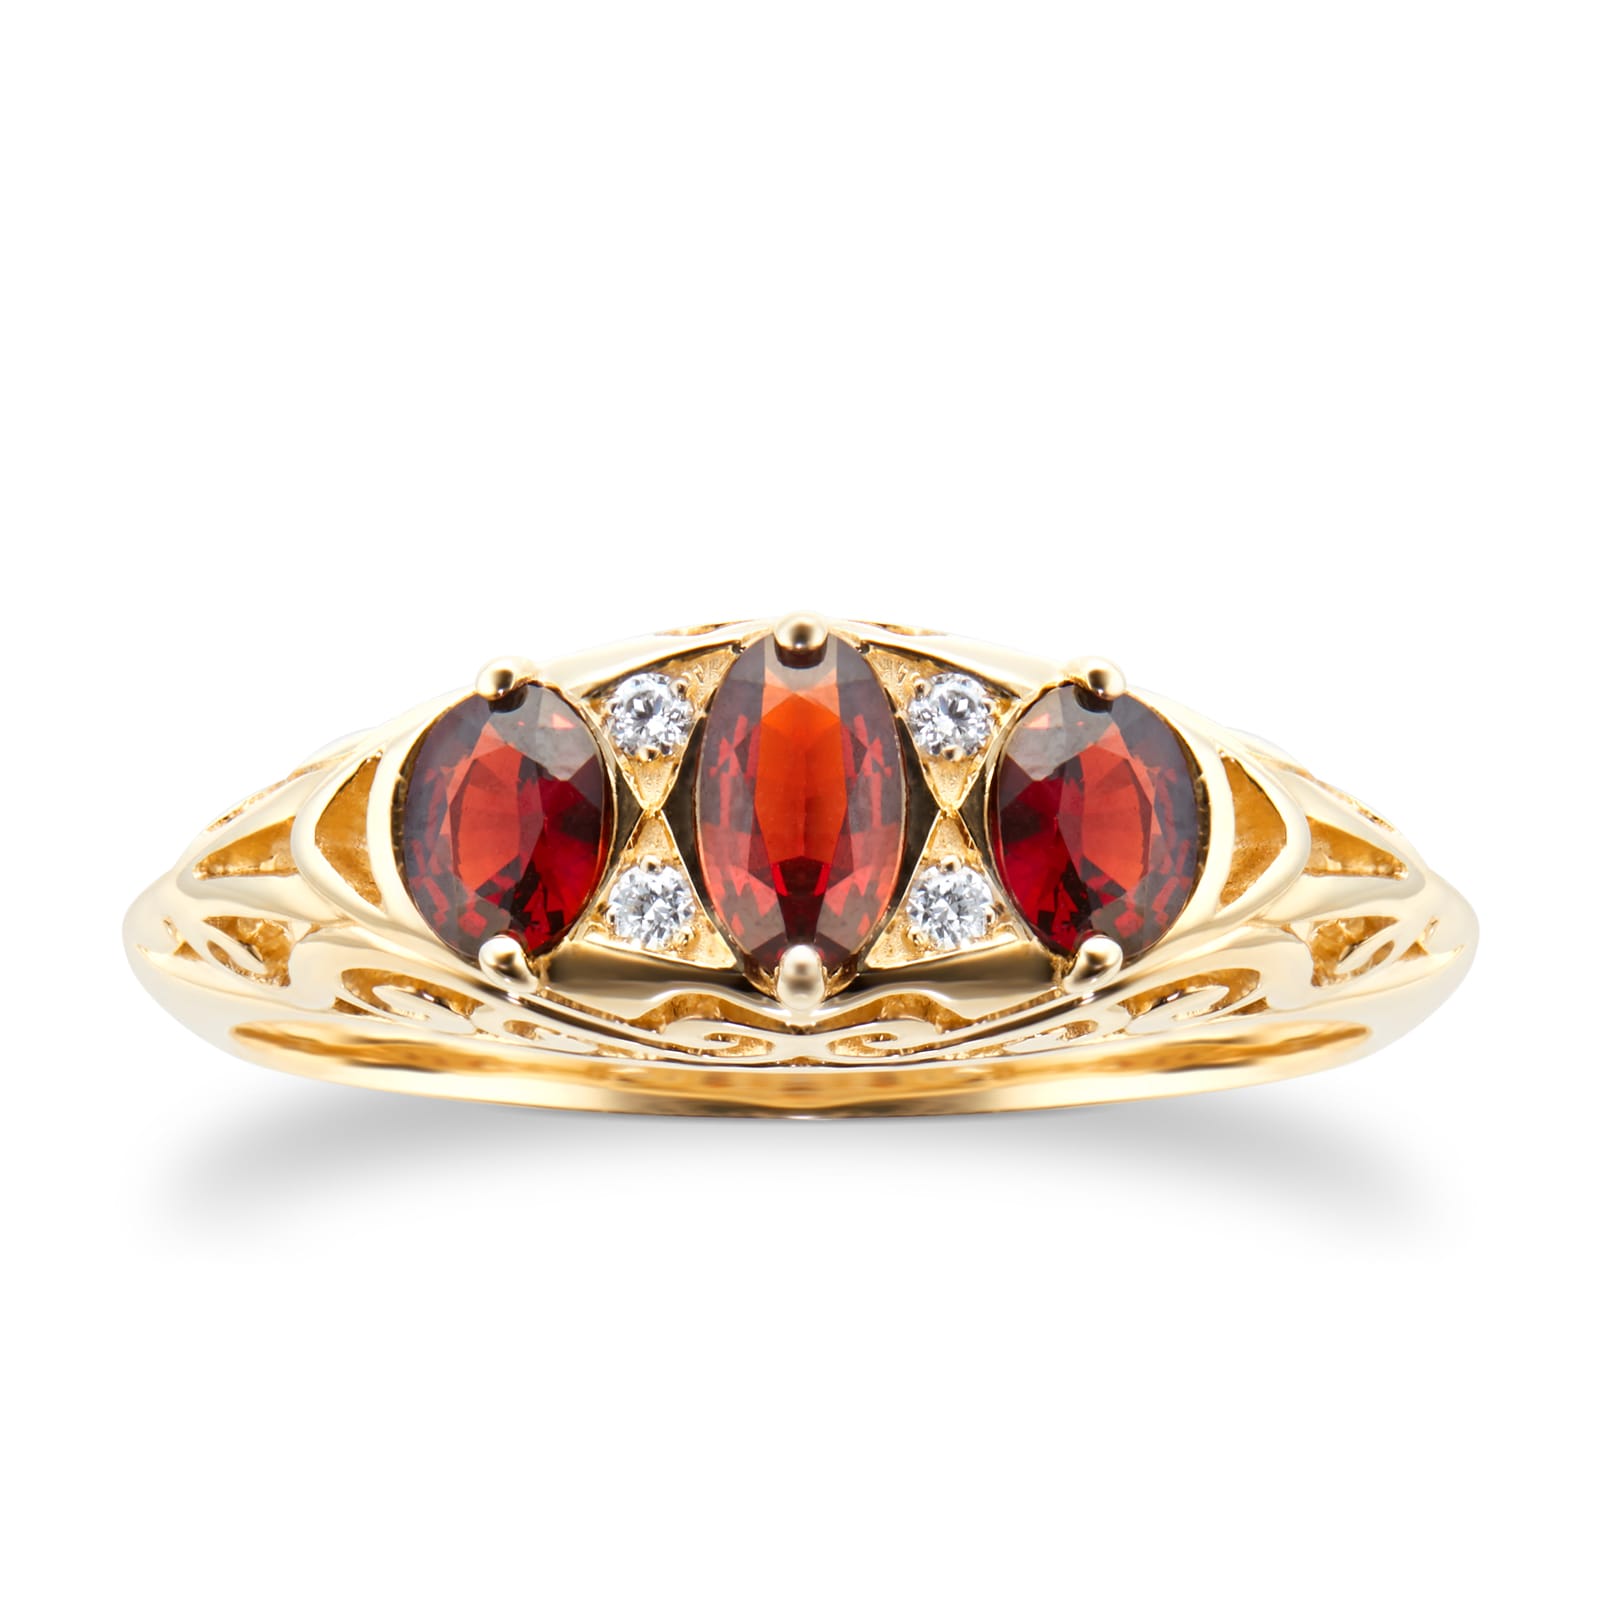 9ct Yellow Gold Victorian Style 3 Stone Garnet & Diamond Ring - Ring Size O